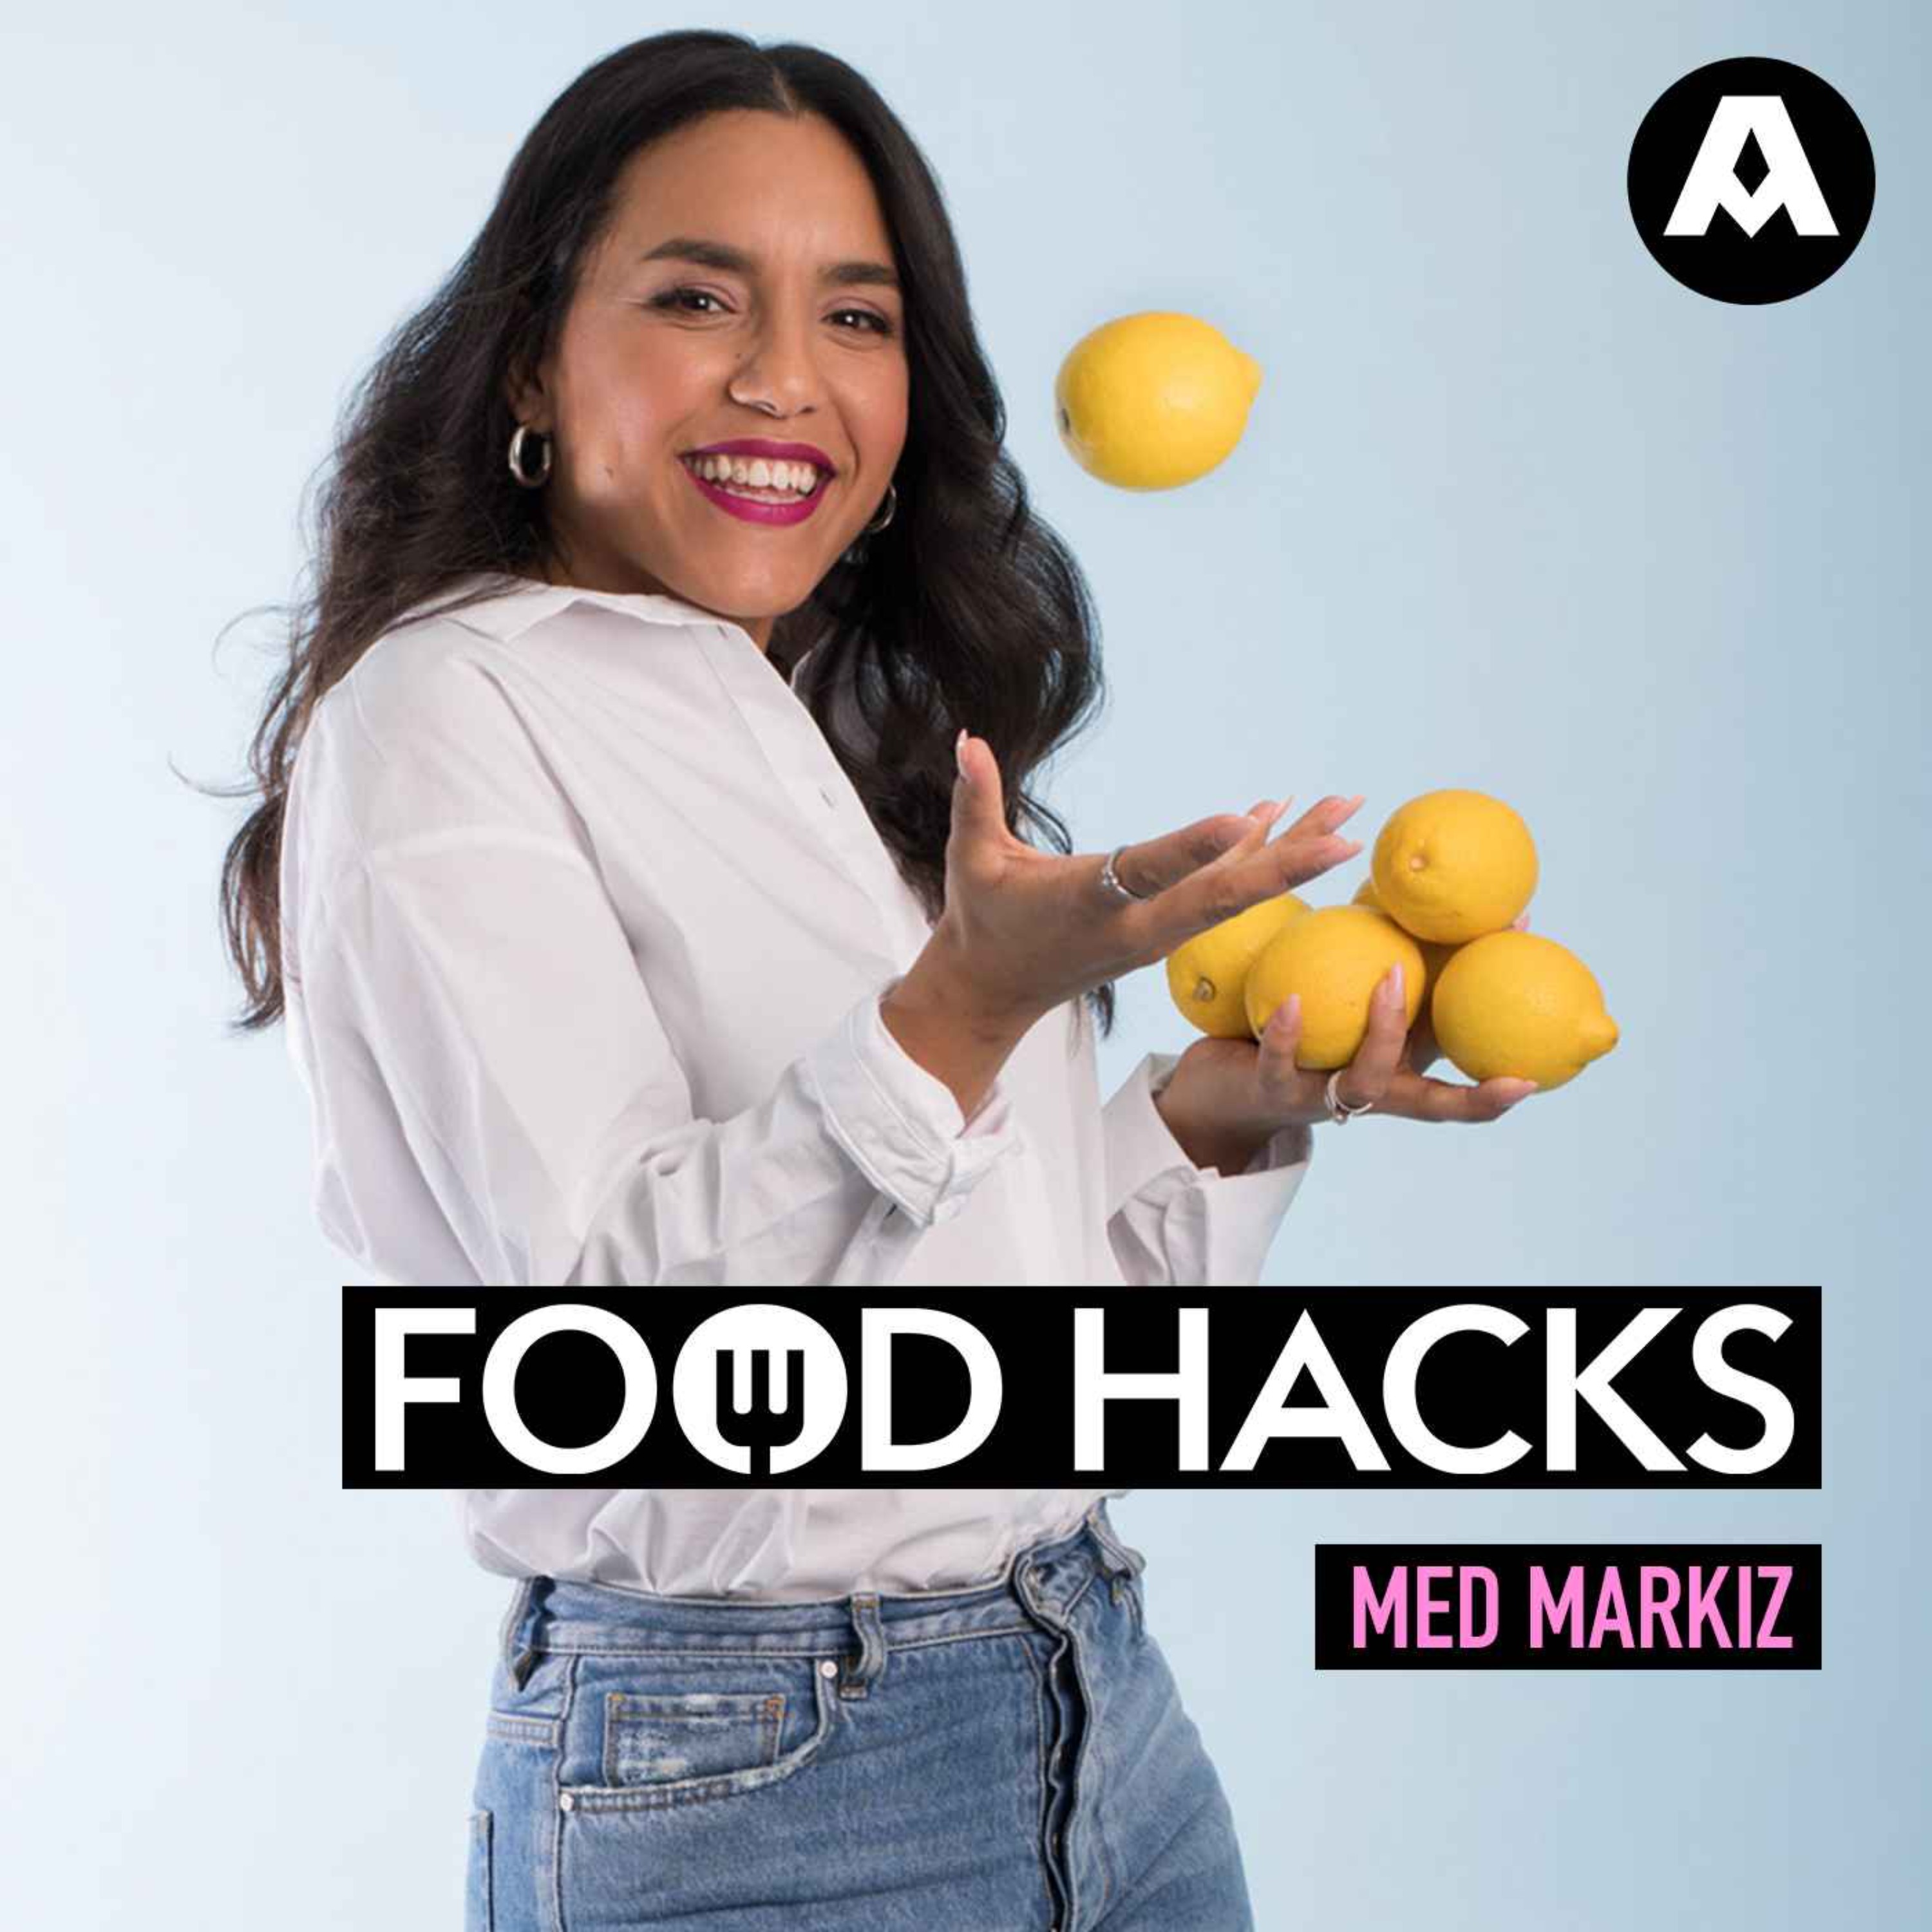 Food hacks: JULGUIDE